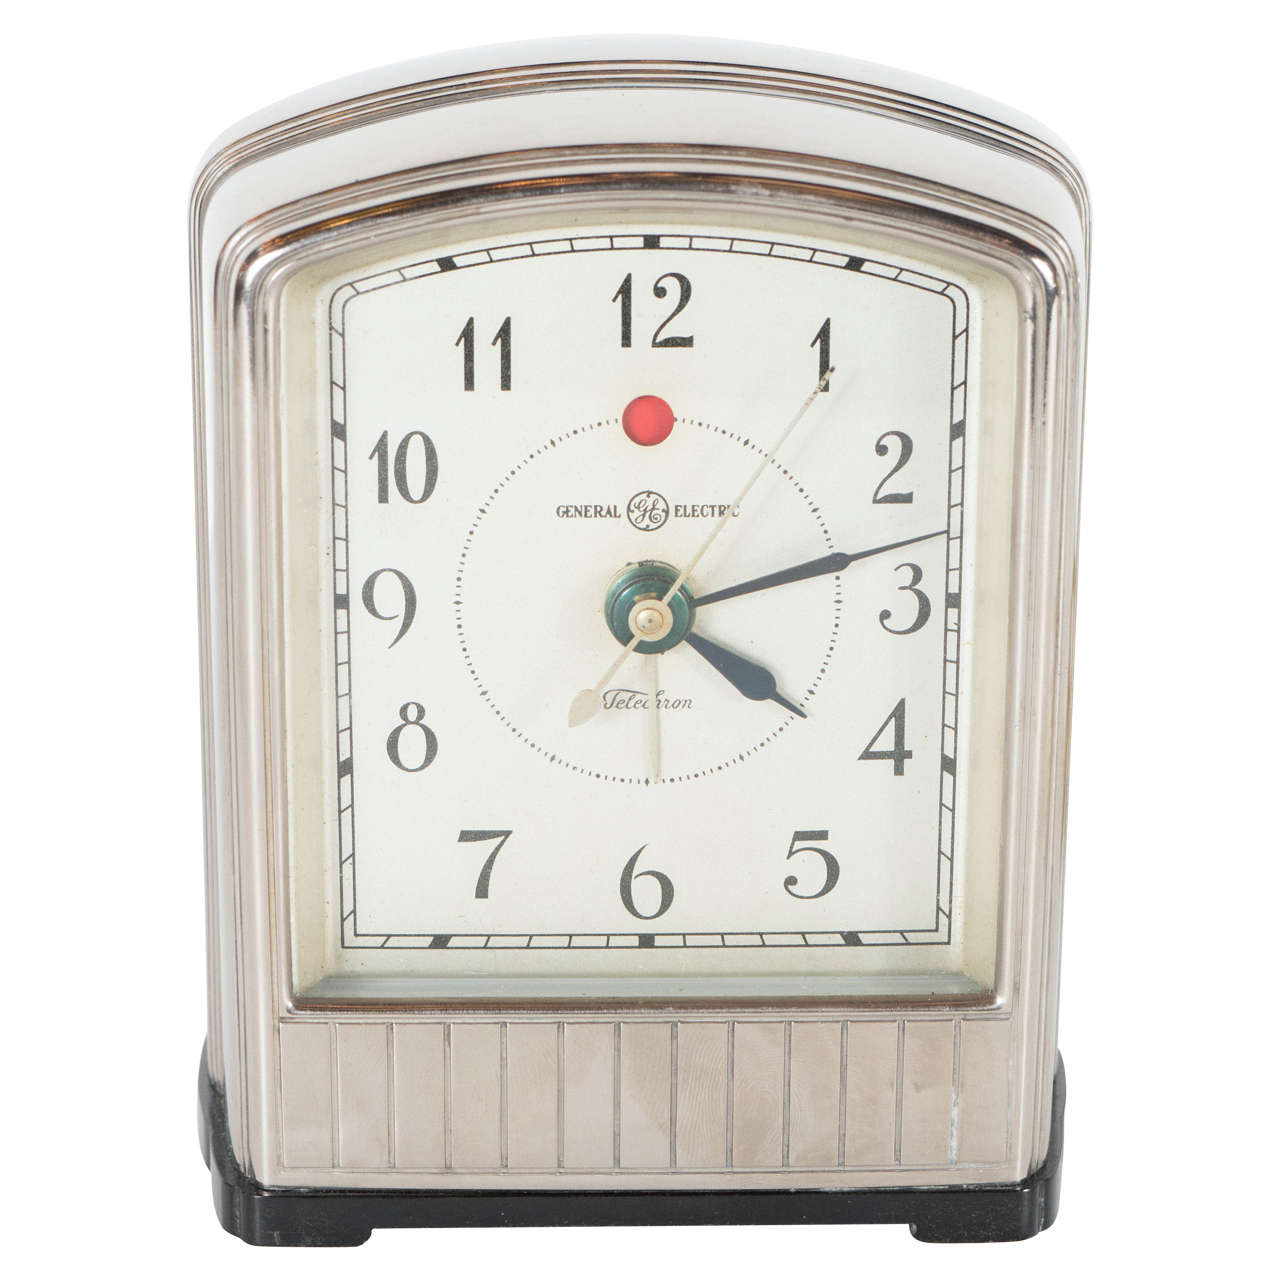 Exceptional Streamline Art Deco Electric Desk Clock by Telechron